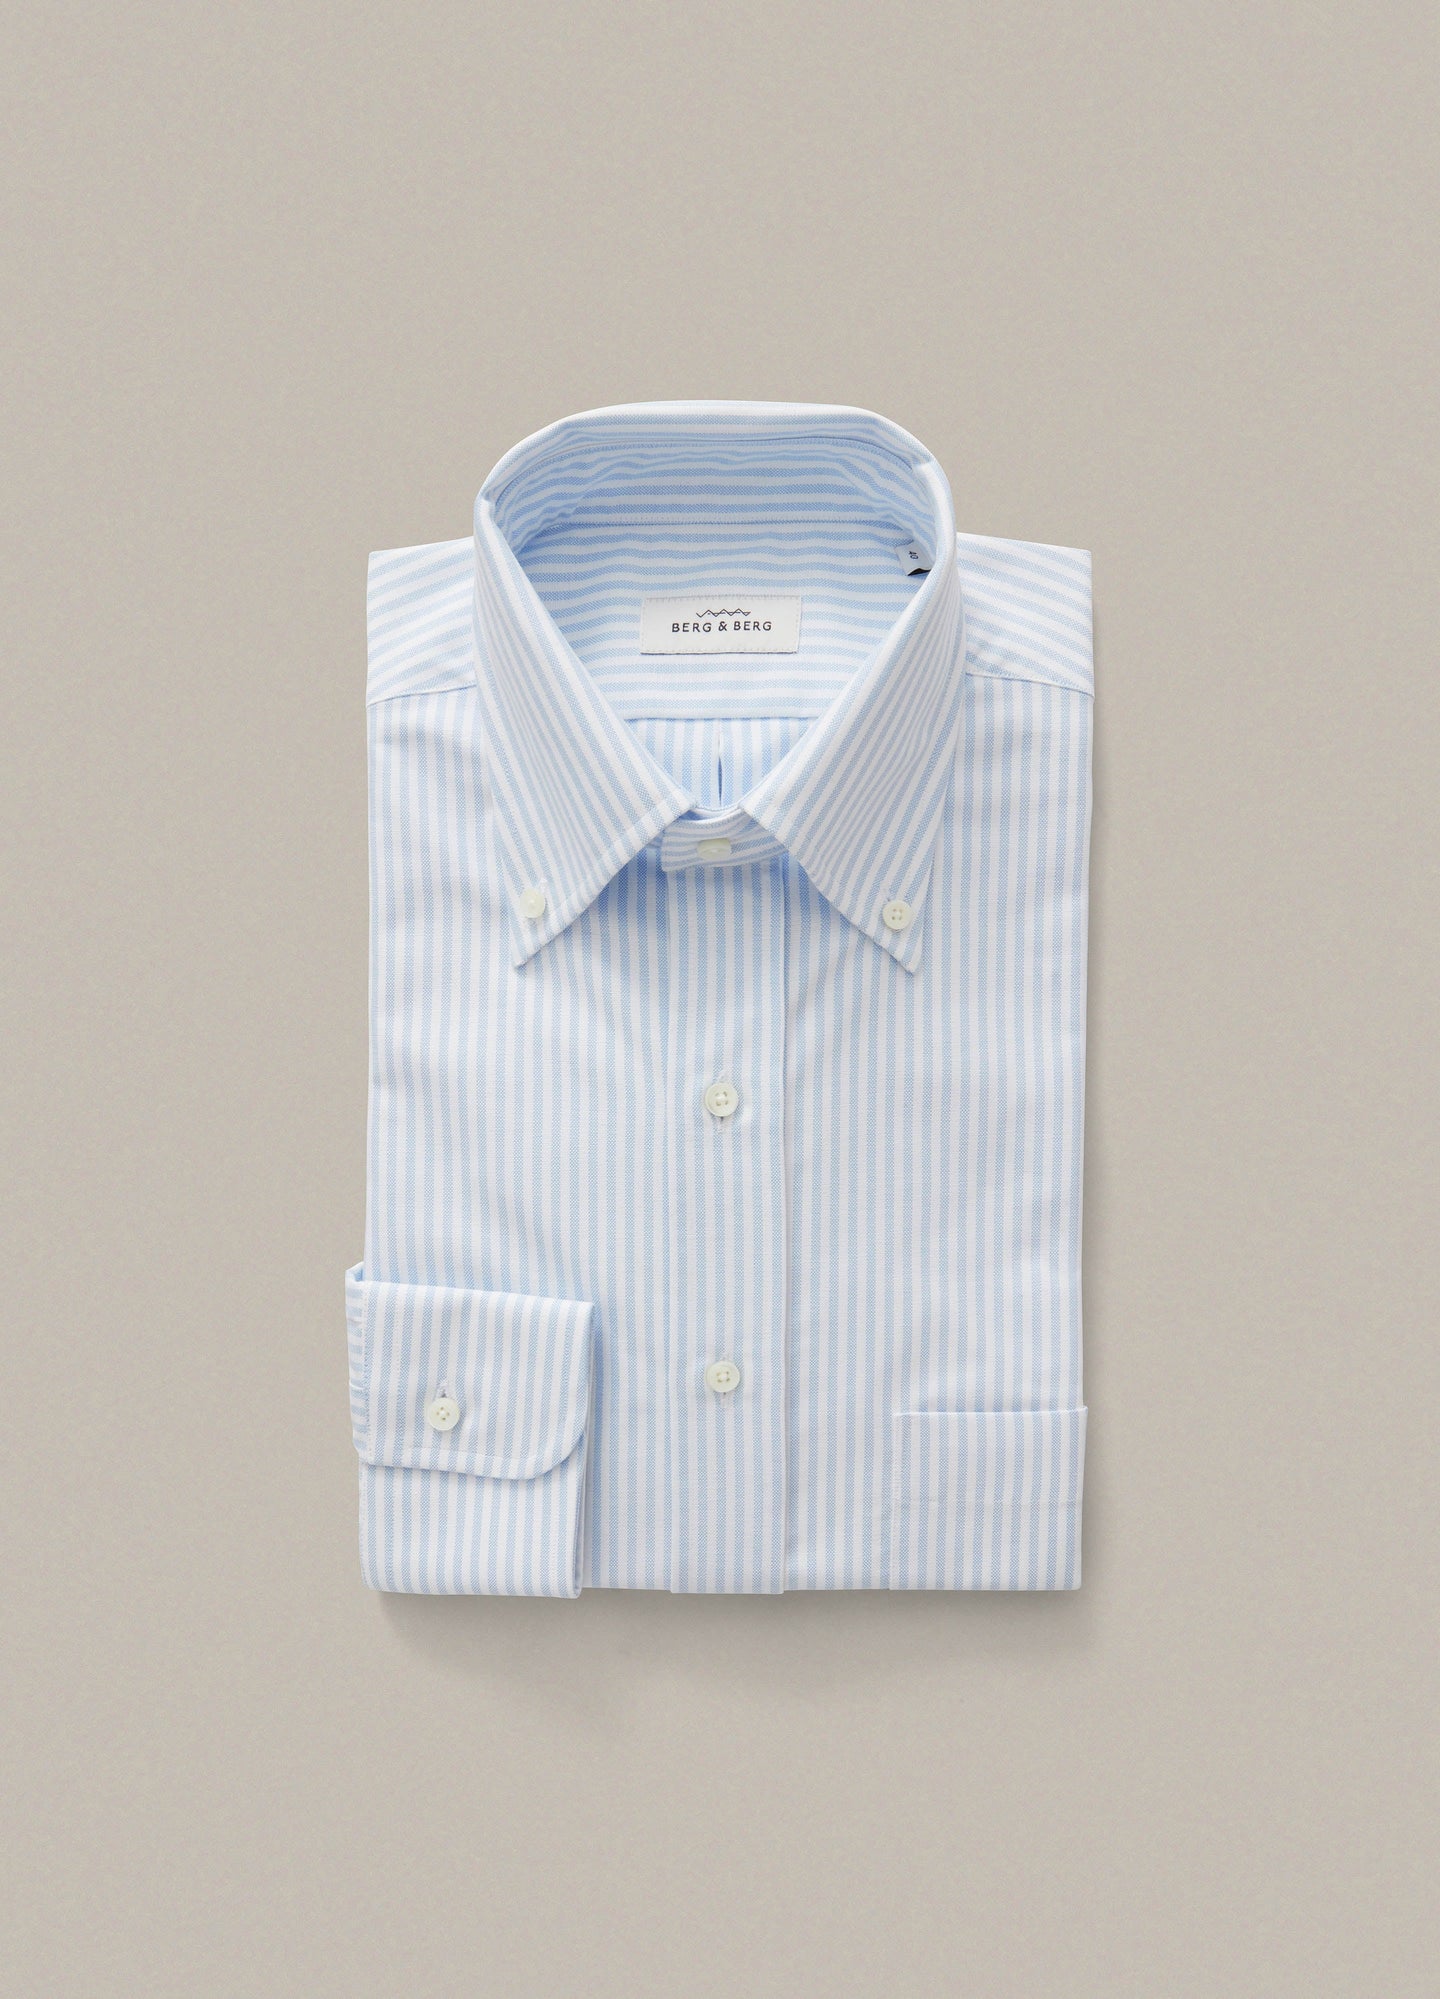 Ferdinand Button Down Shirt - White/Blue Berg & Berg